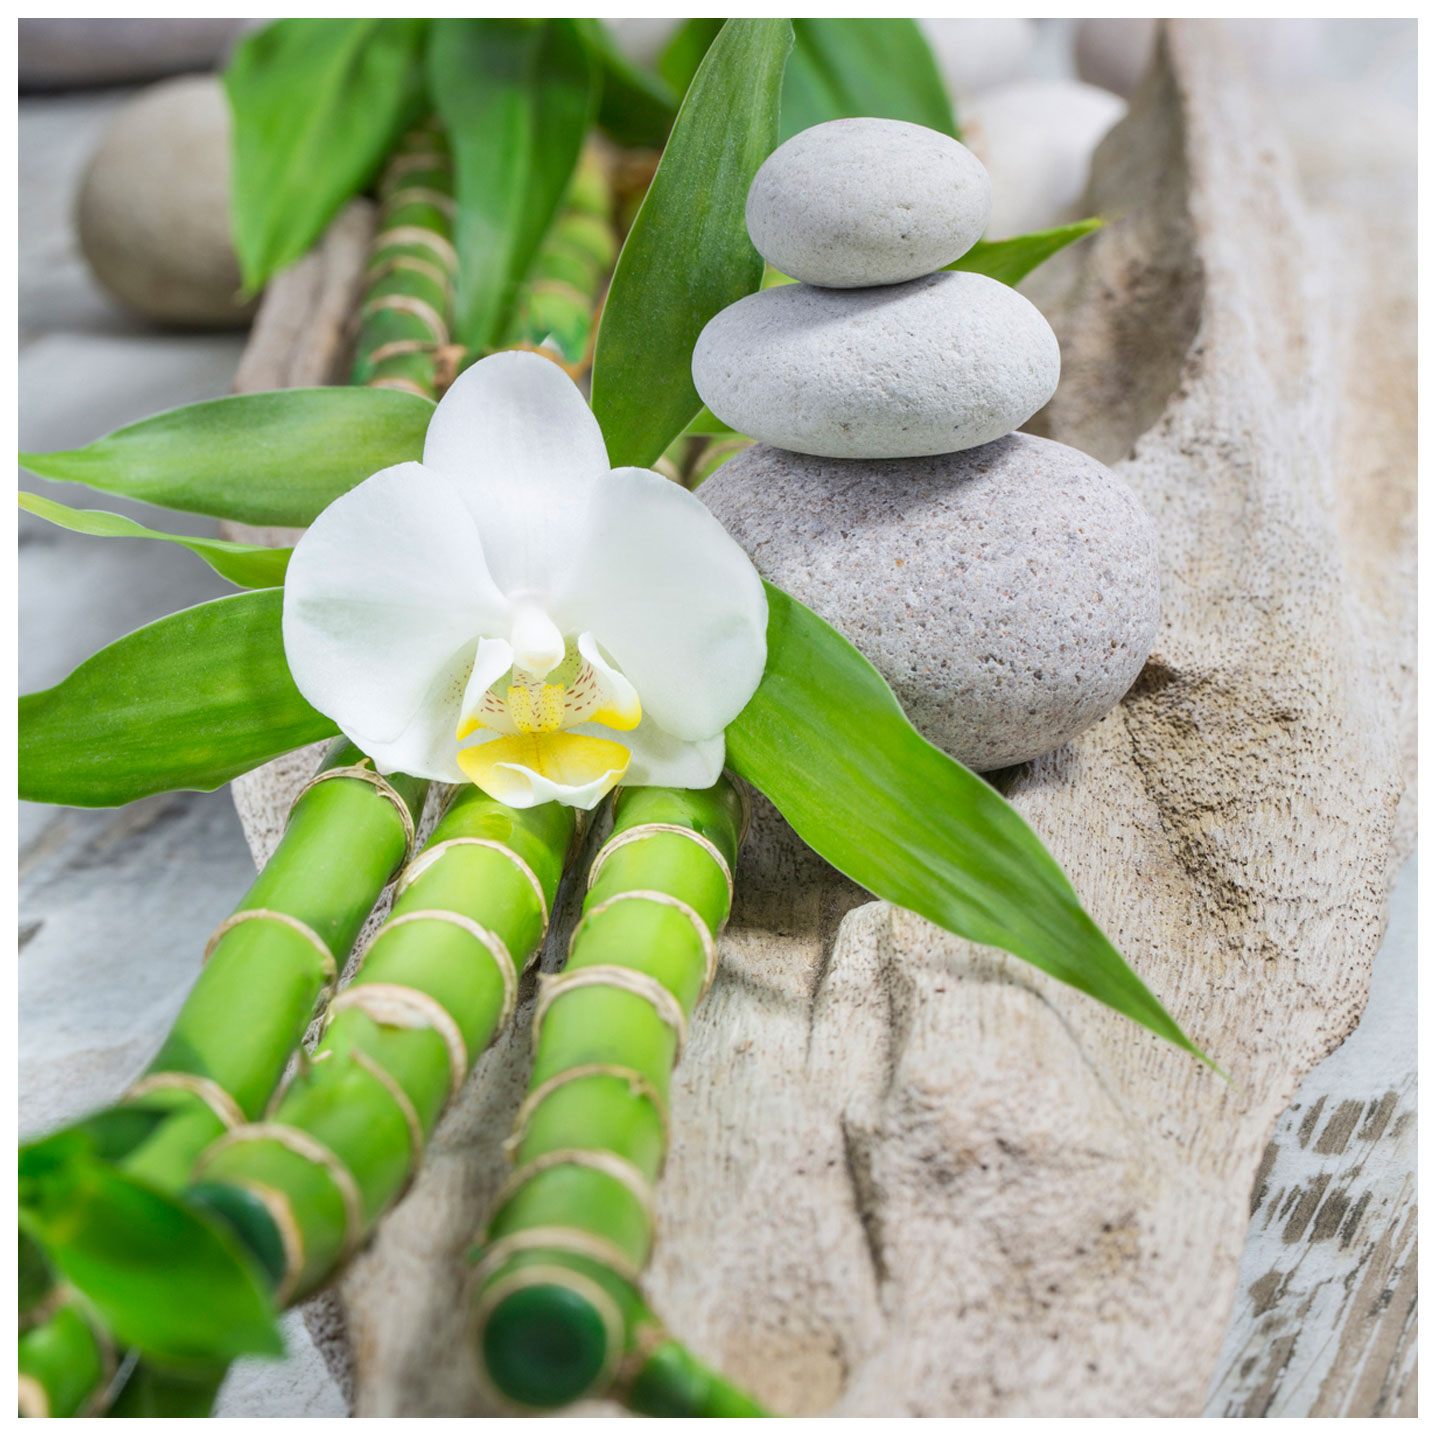 levandeo Glasbild 30x30cm Weiße Orchidee Bambus Wellness Wandbild Wanddeko